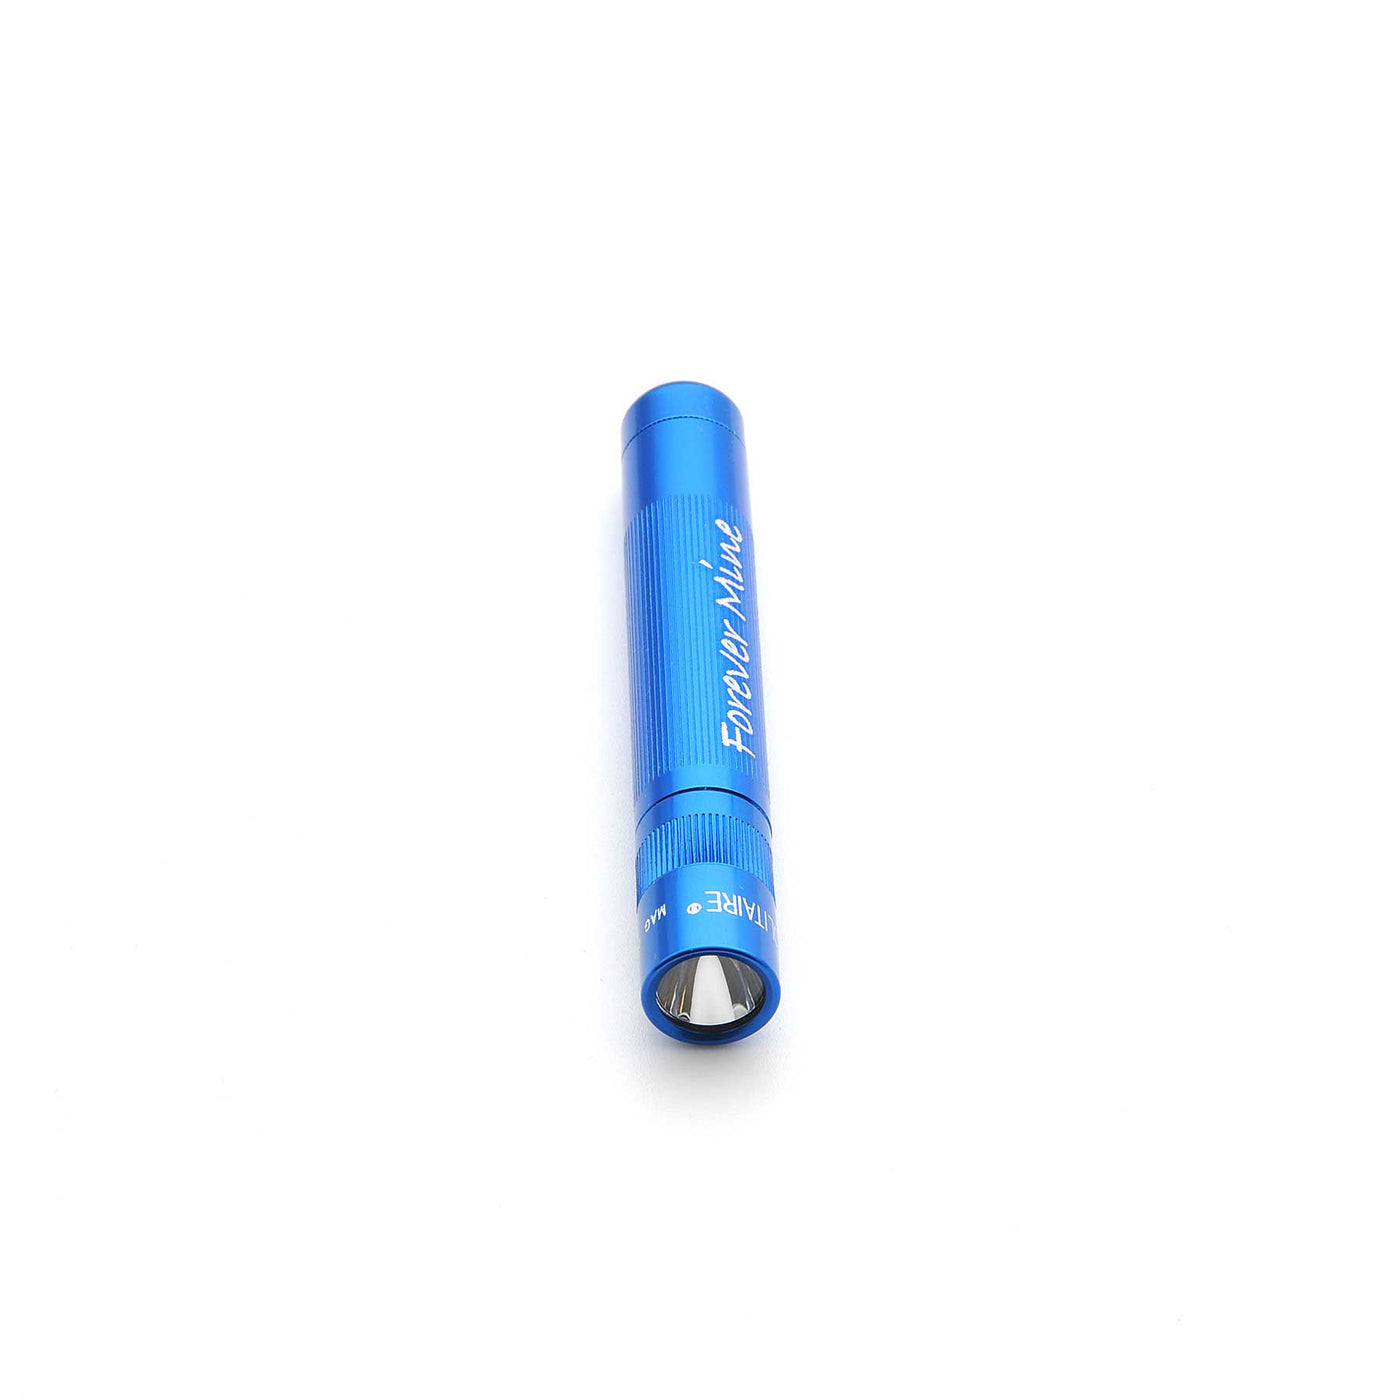 Maglite Solitaire LED - Forever Mine - Key Chain Flashlight Blue